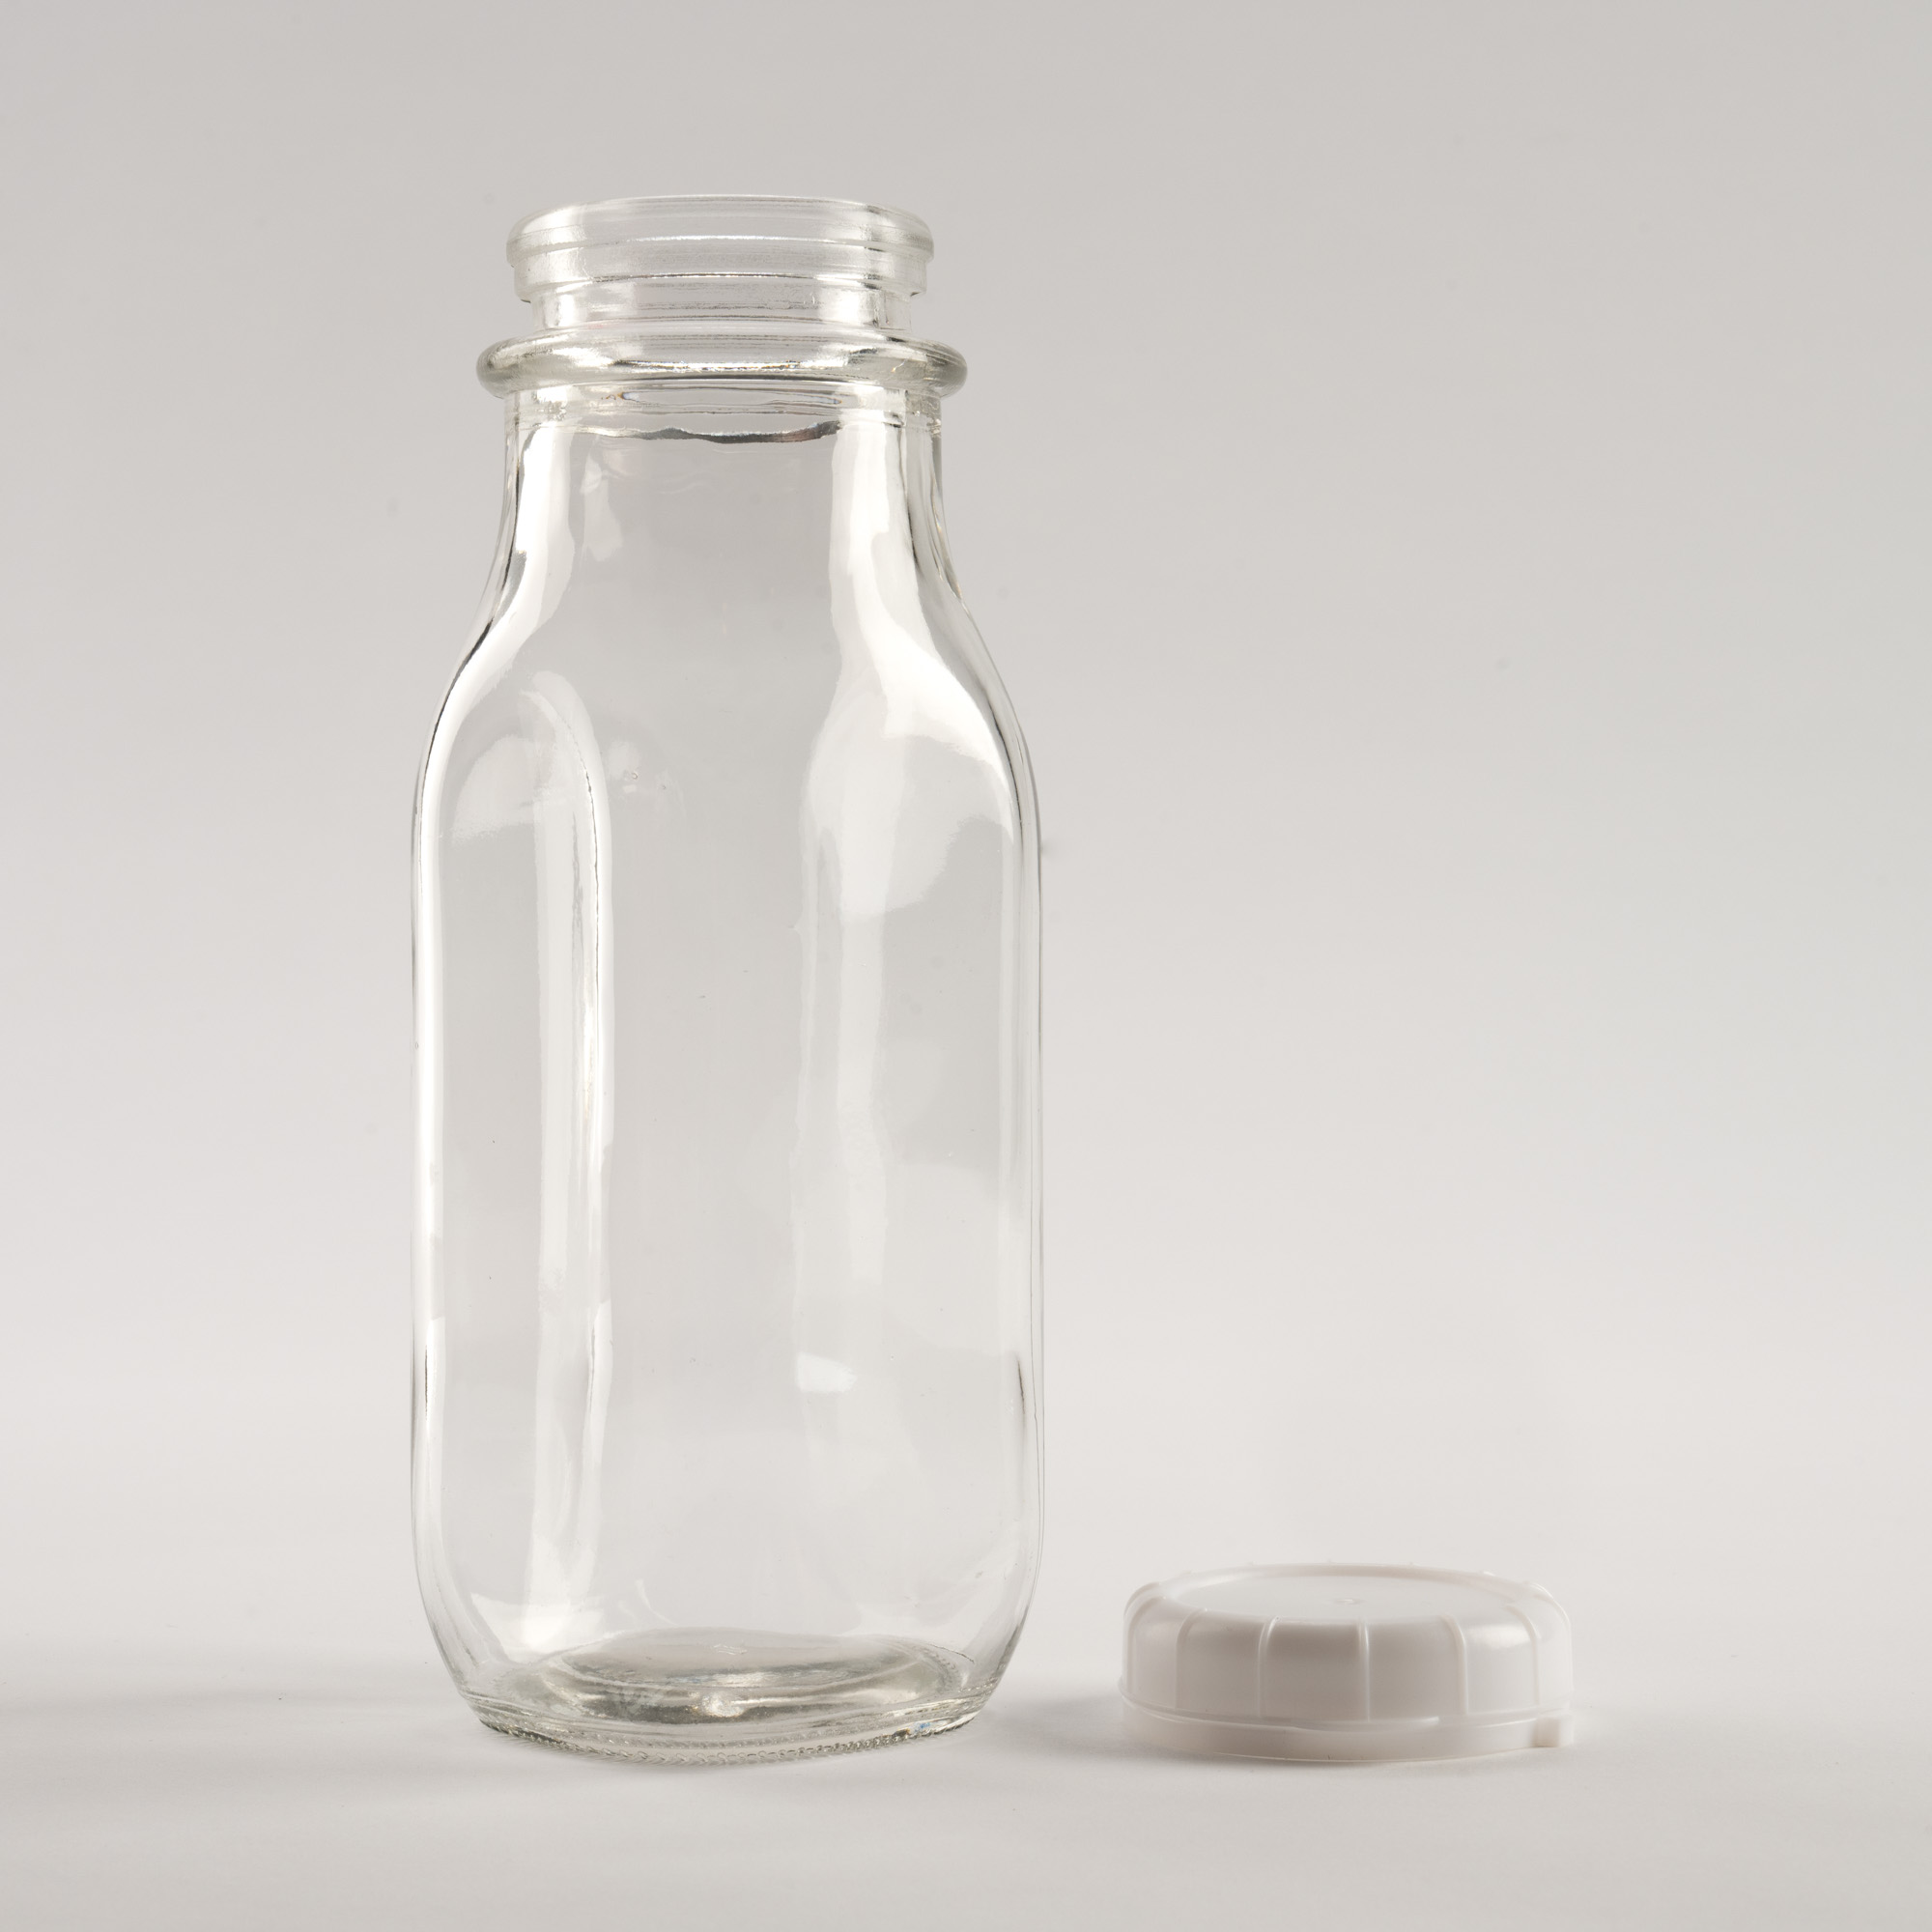 12 oz Glass Bottle - 1,400 qty pallet